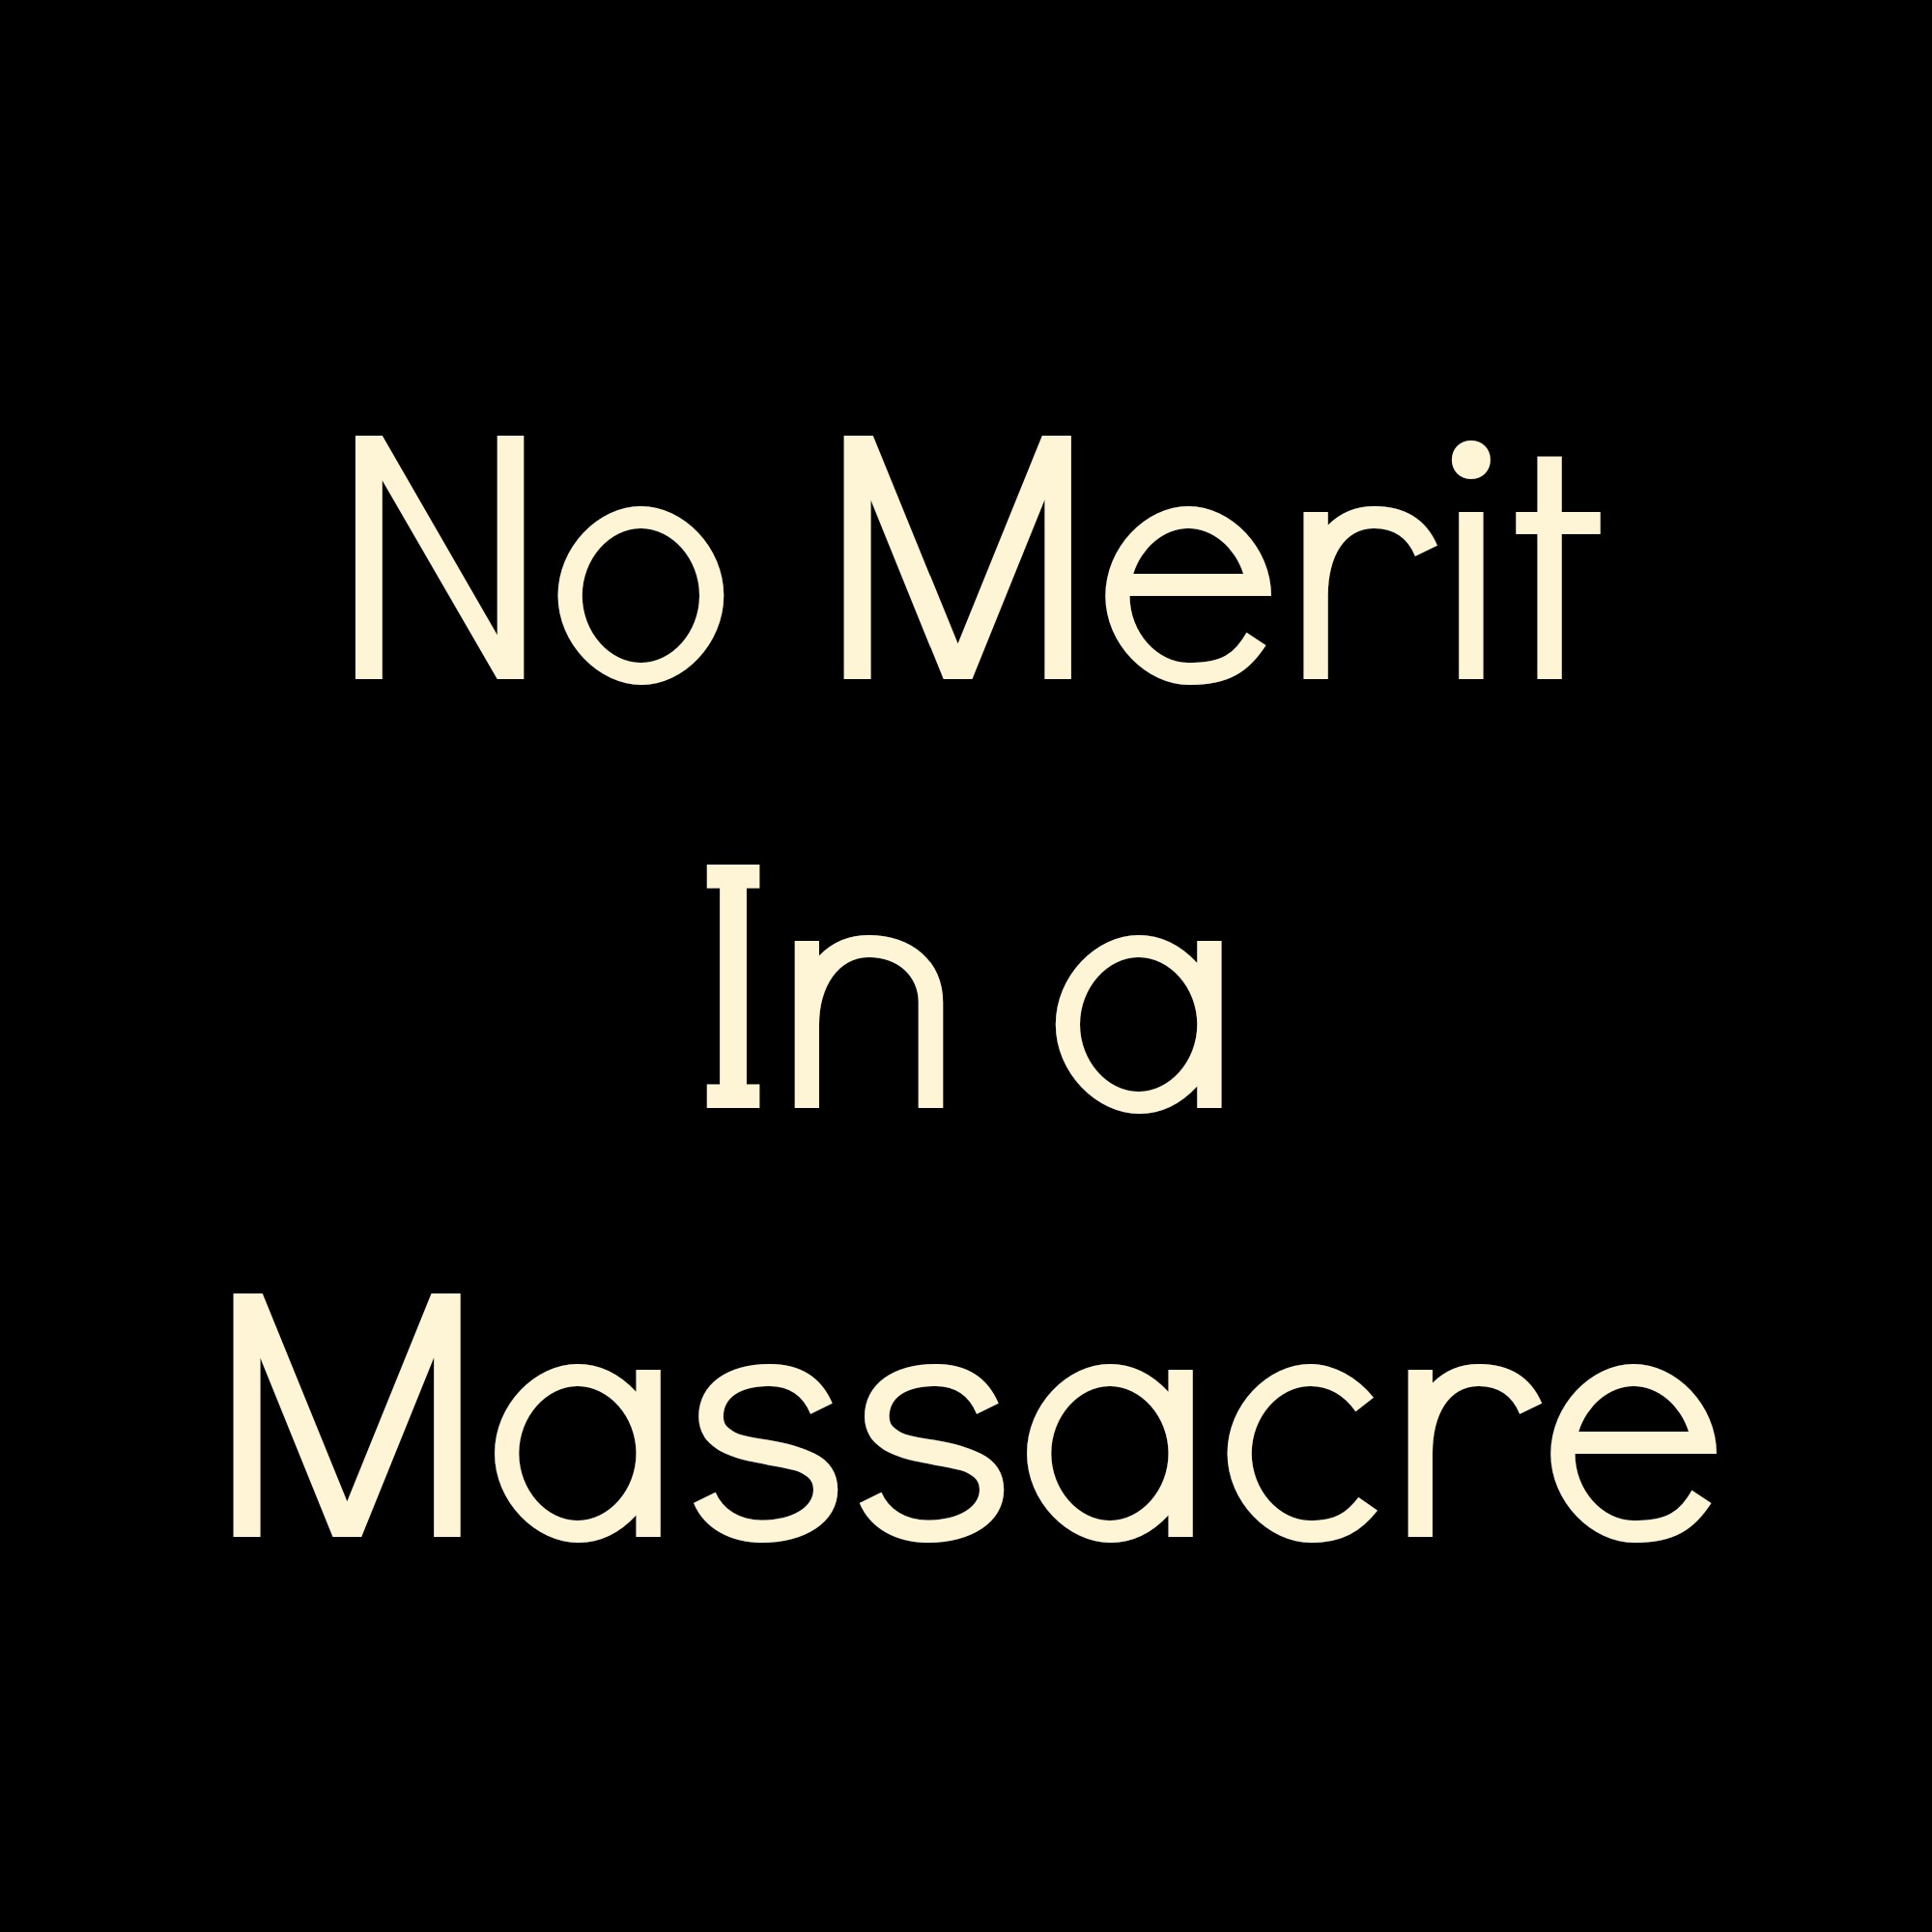 No Merit In a Massacre